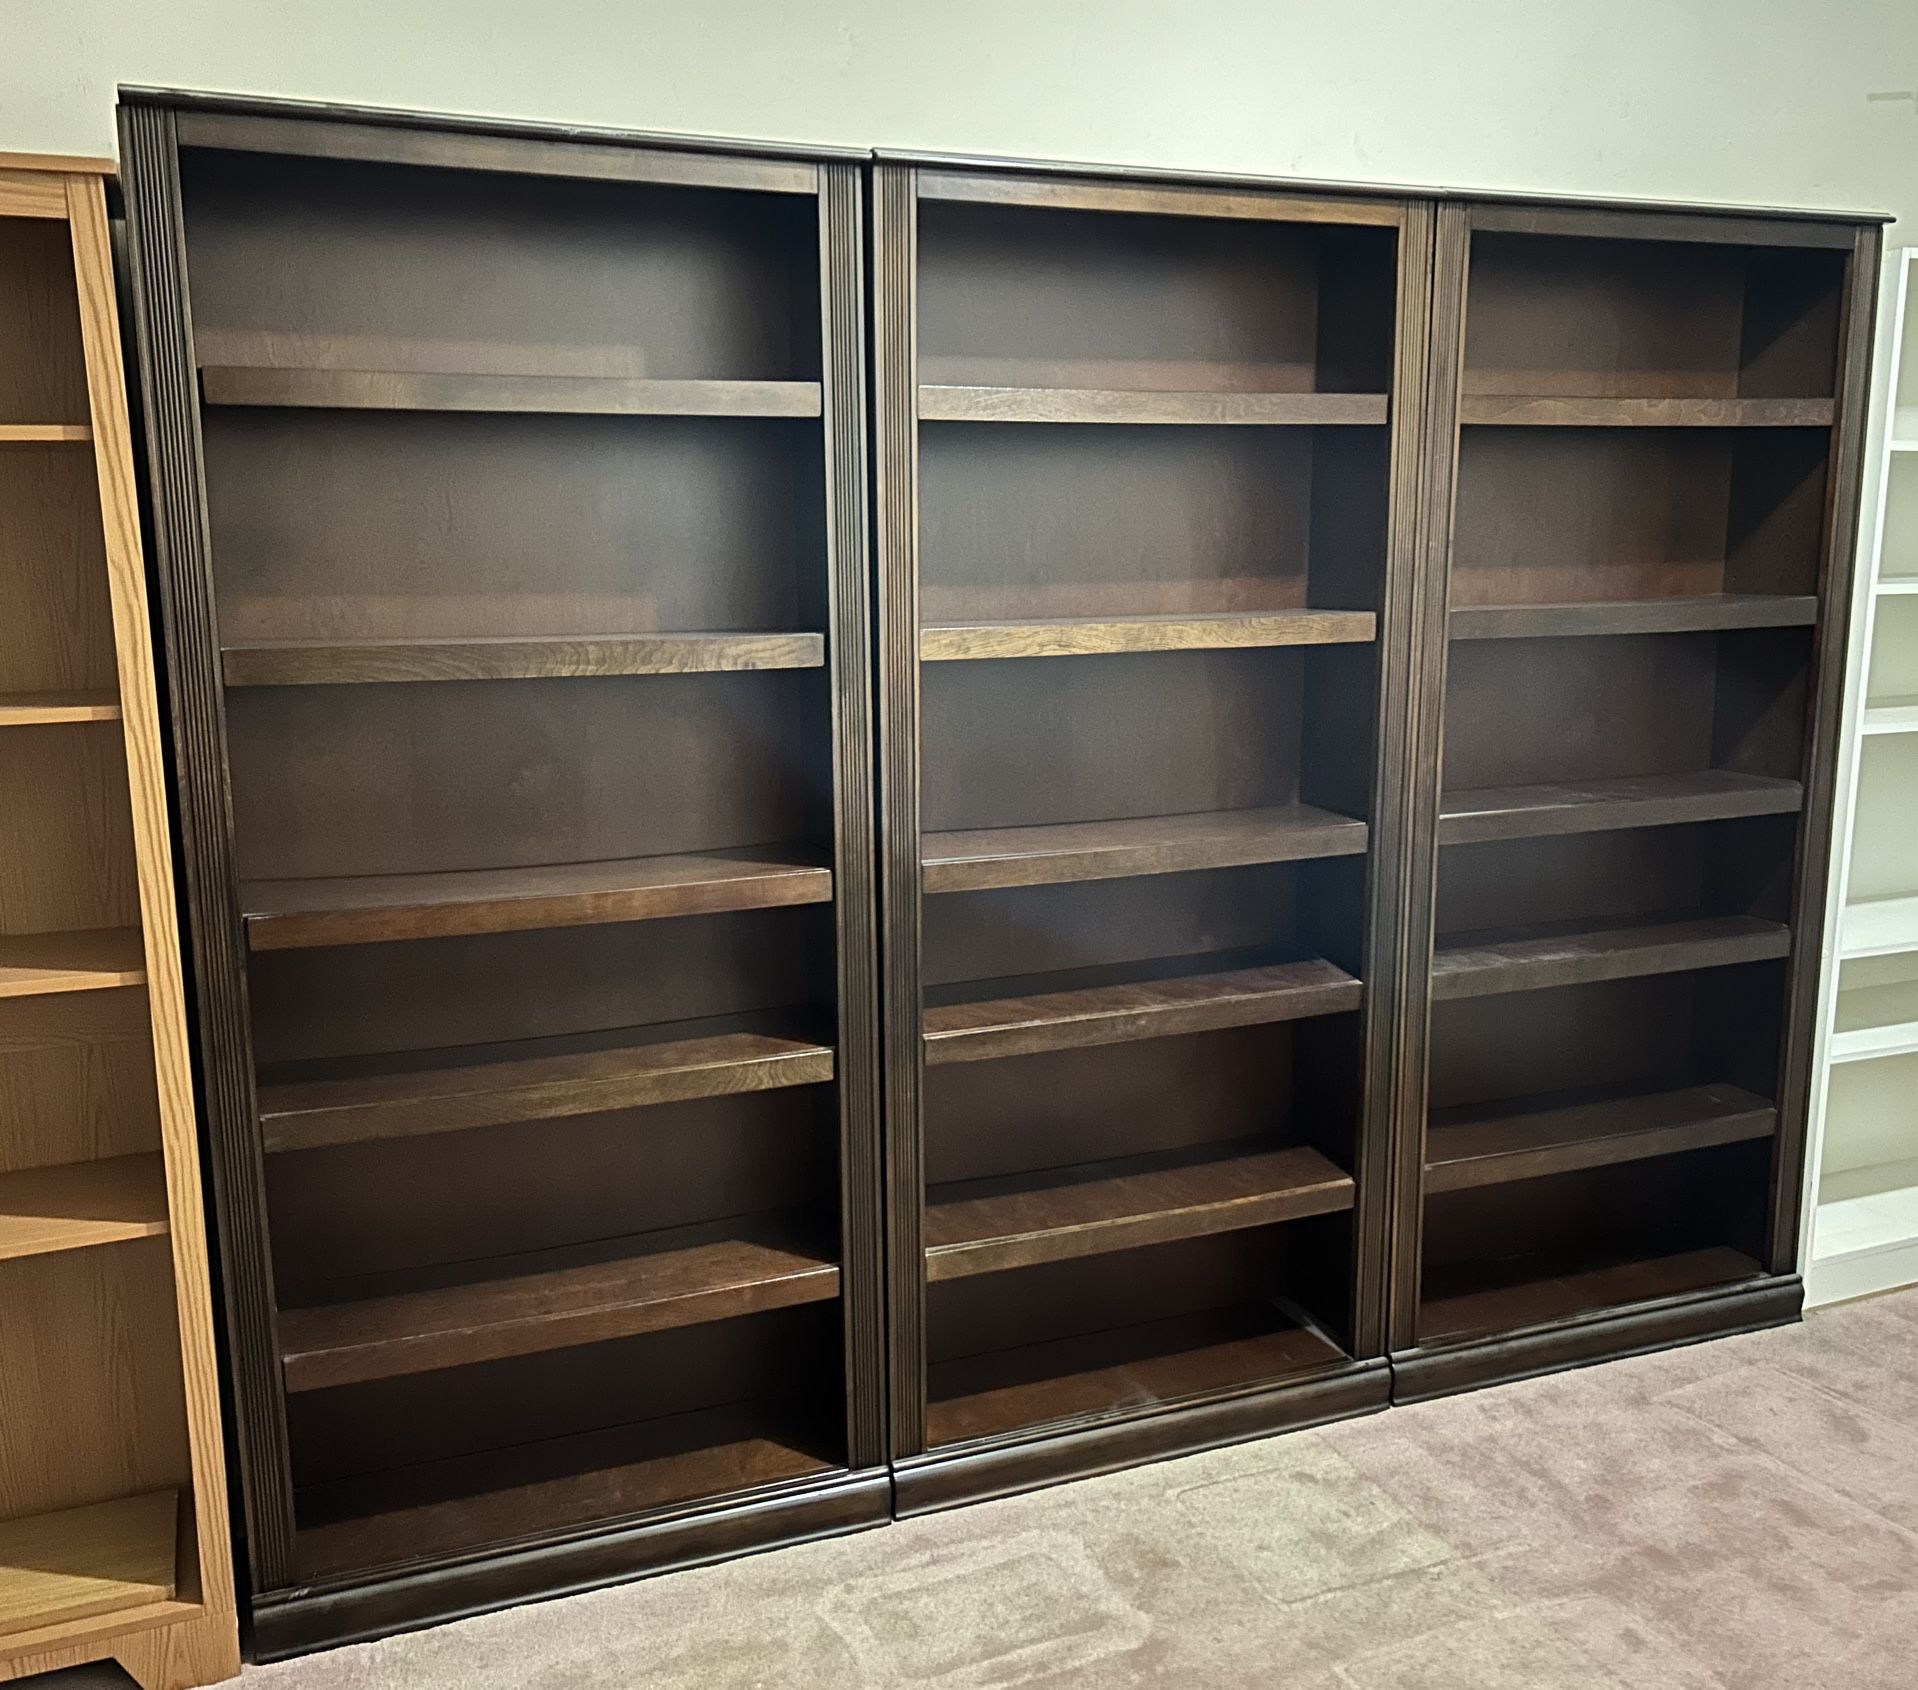 Set of Three Sturdy Wooden Bookshelves - Classic Style